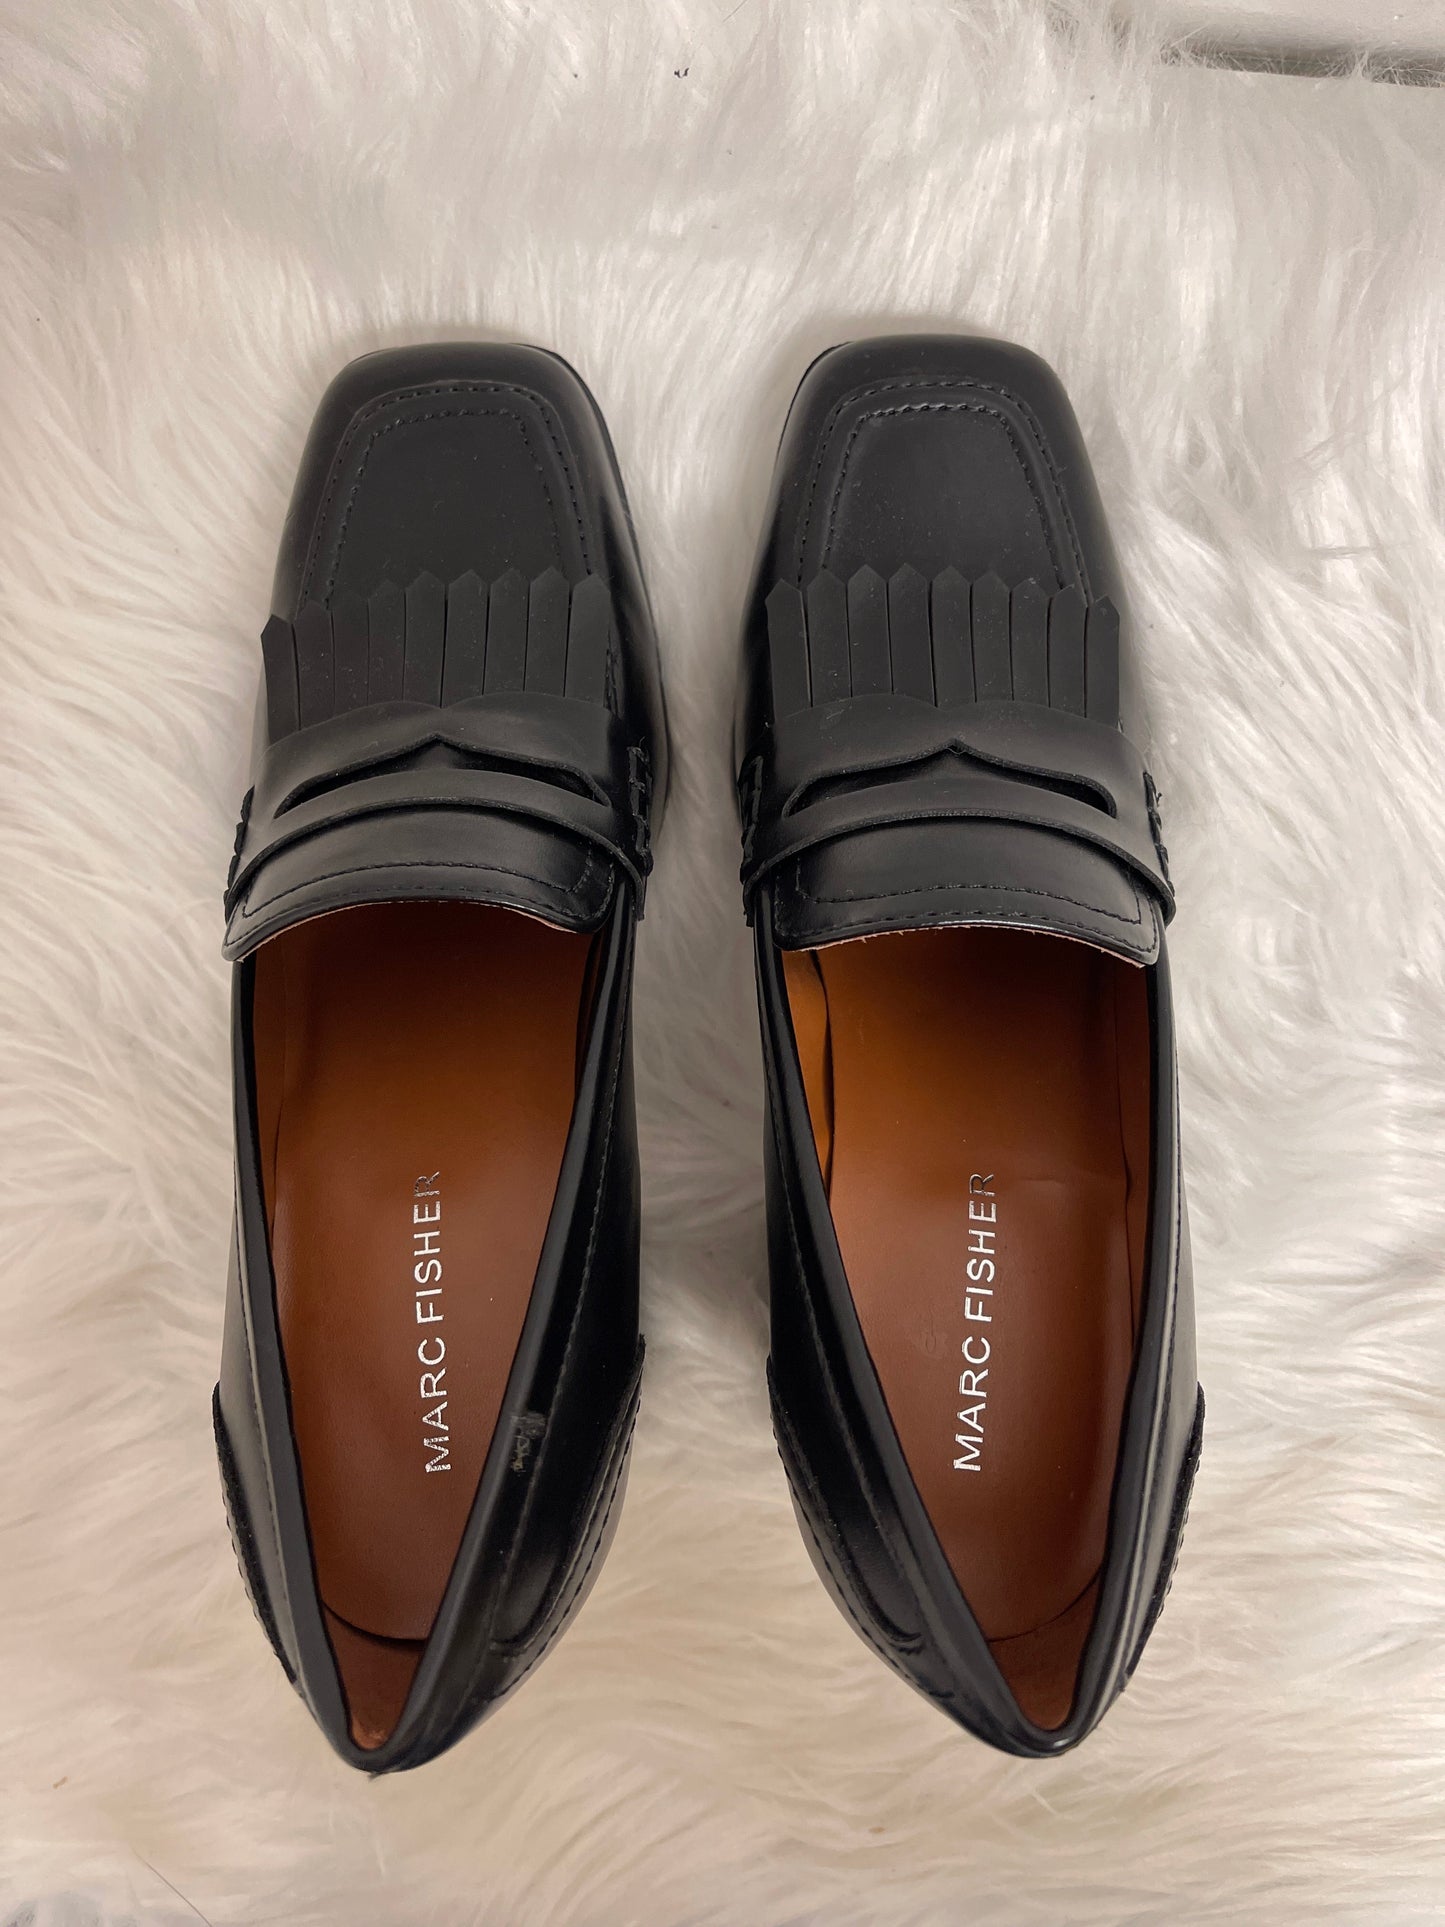 Black Shoes Heels Block Marc Fisher, Size 6.5